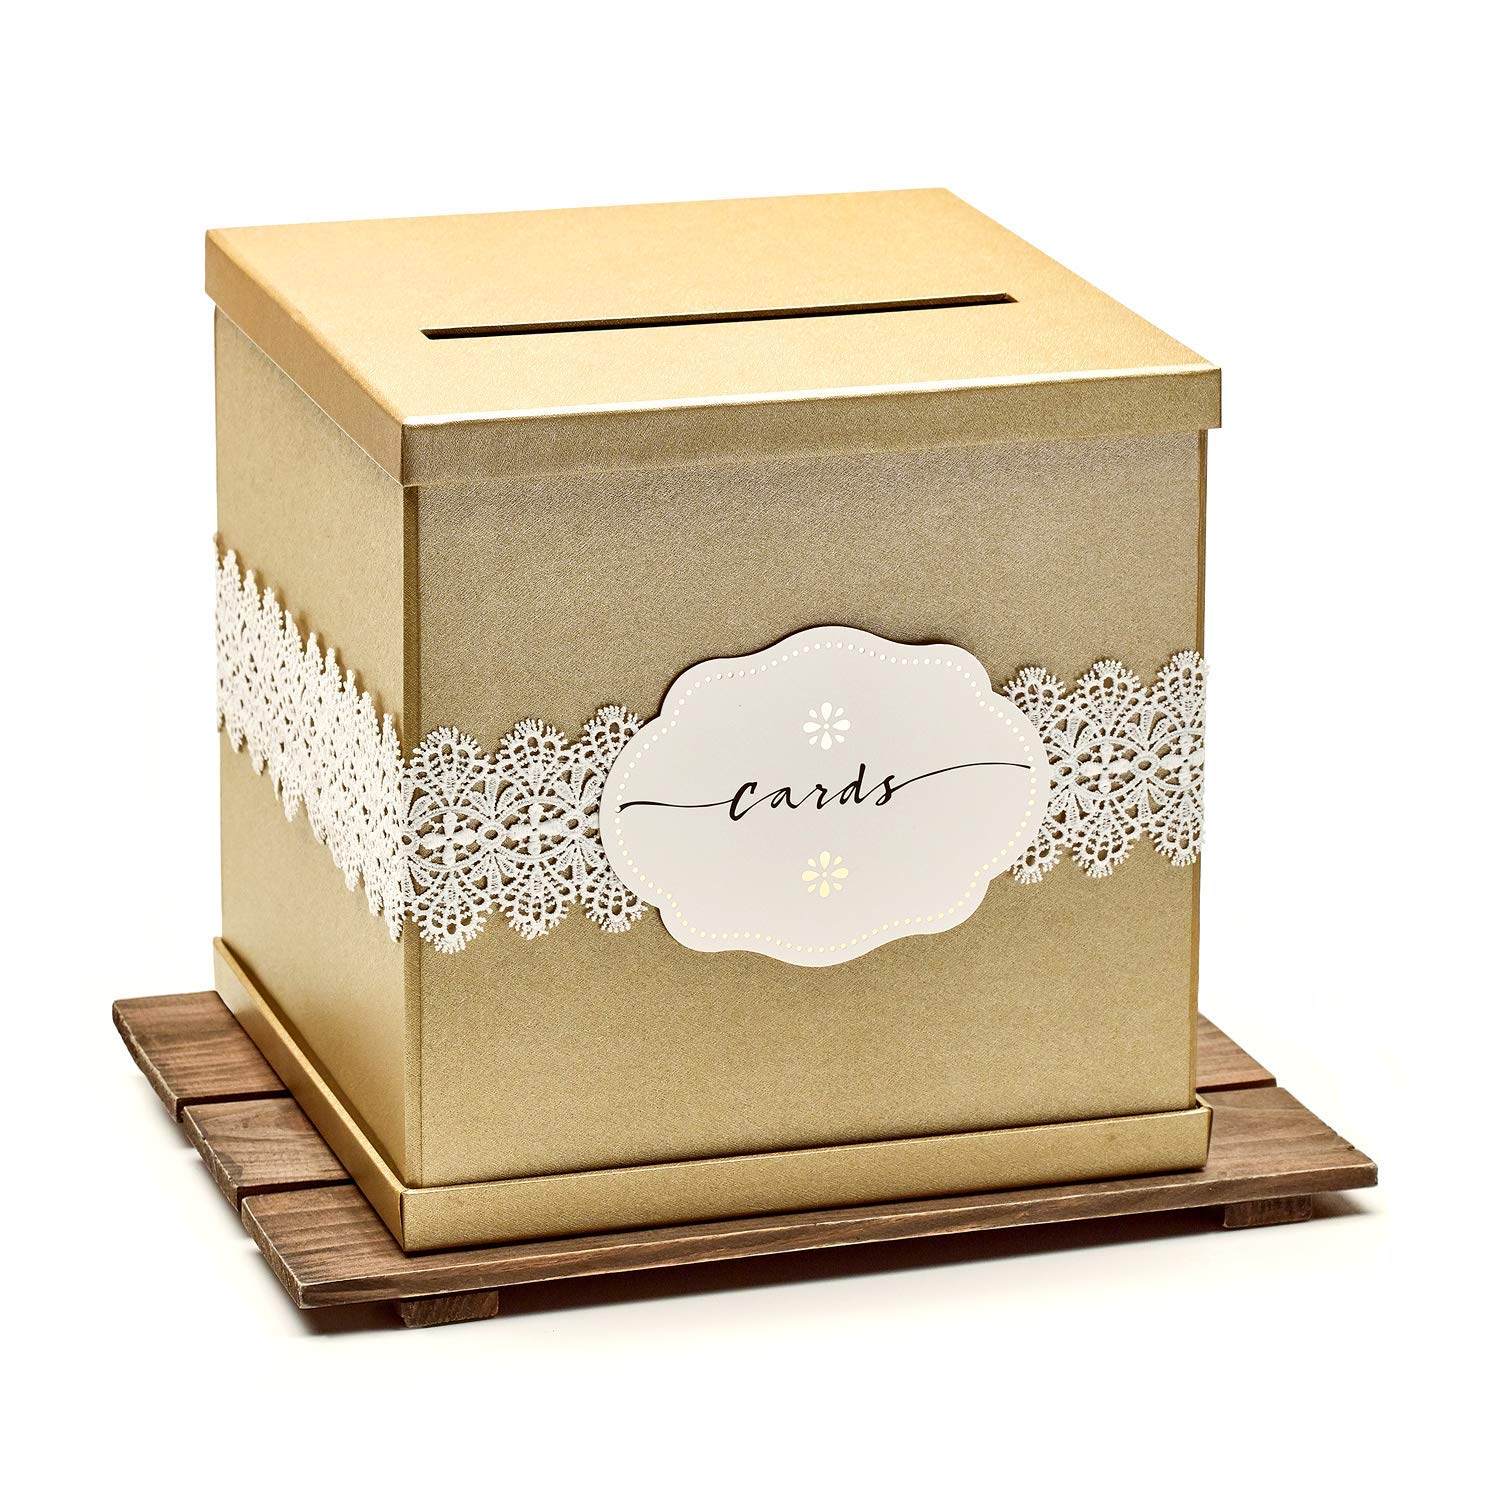 GOLD WEDDING GIFT CARD BOX (10″ X 10″)